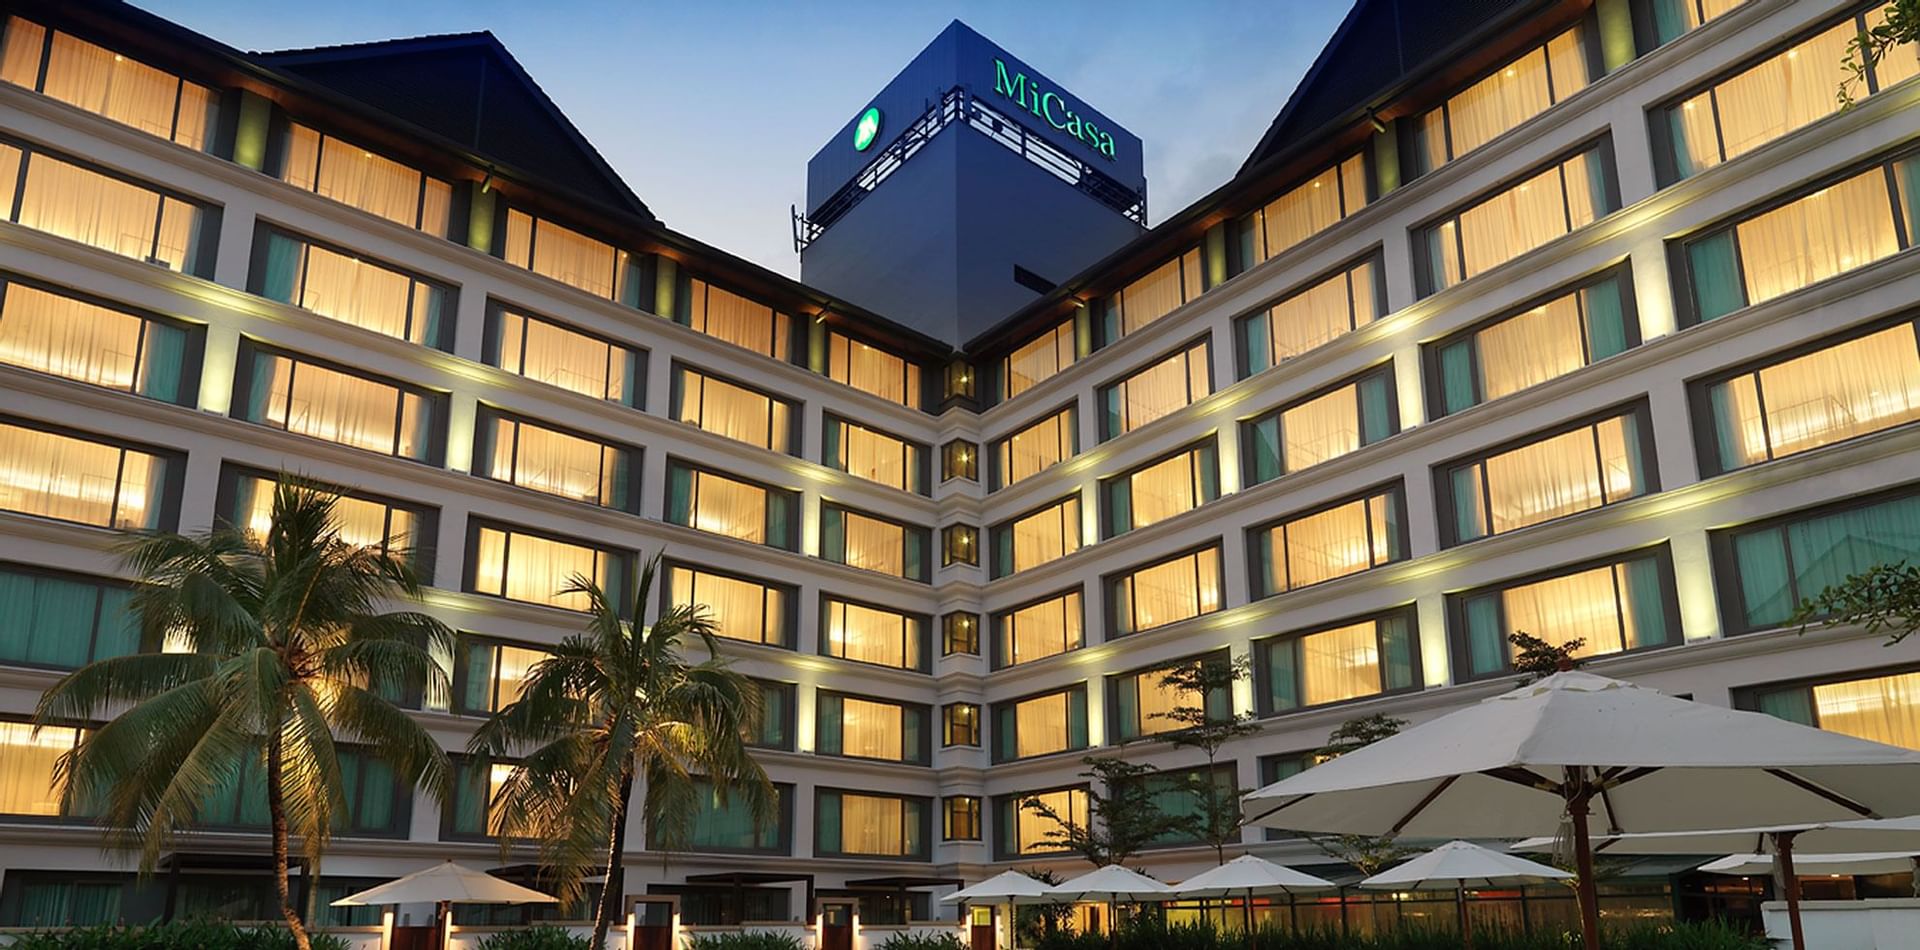 Hotel in KLCC Kuala Lumpur | MiCasa All Suite Hotel Kuala Lumpur